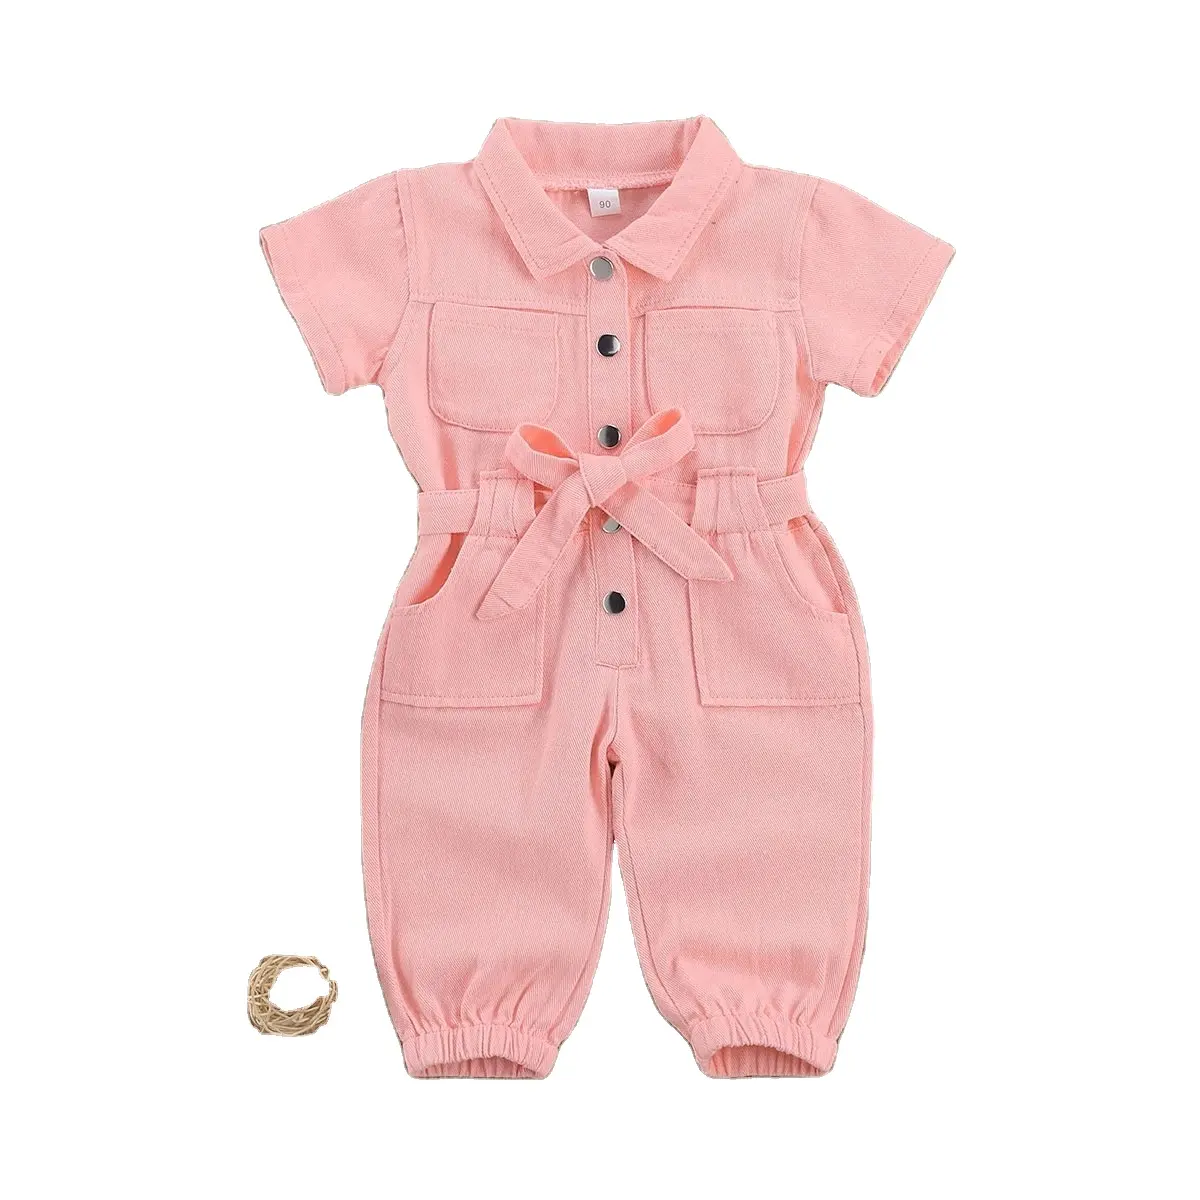 Toddler Girl romper short-sleeved pocket Pink Color belt bow baby onesie baby clothes baby romper